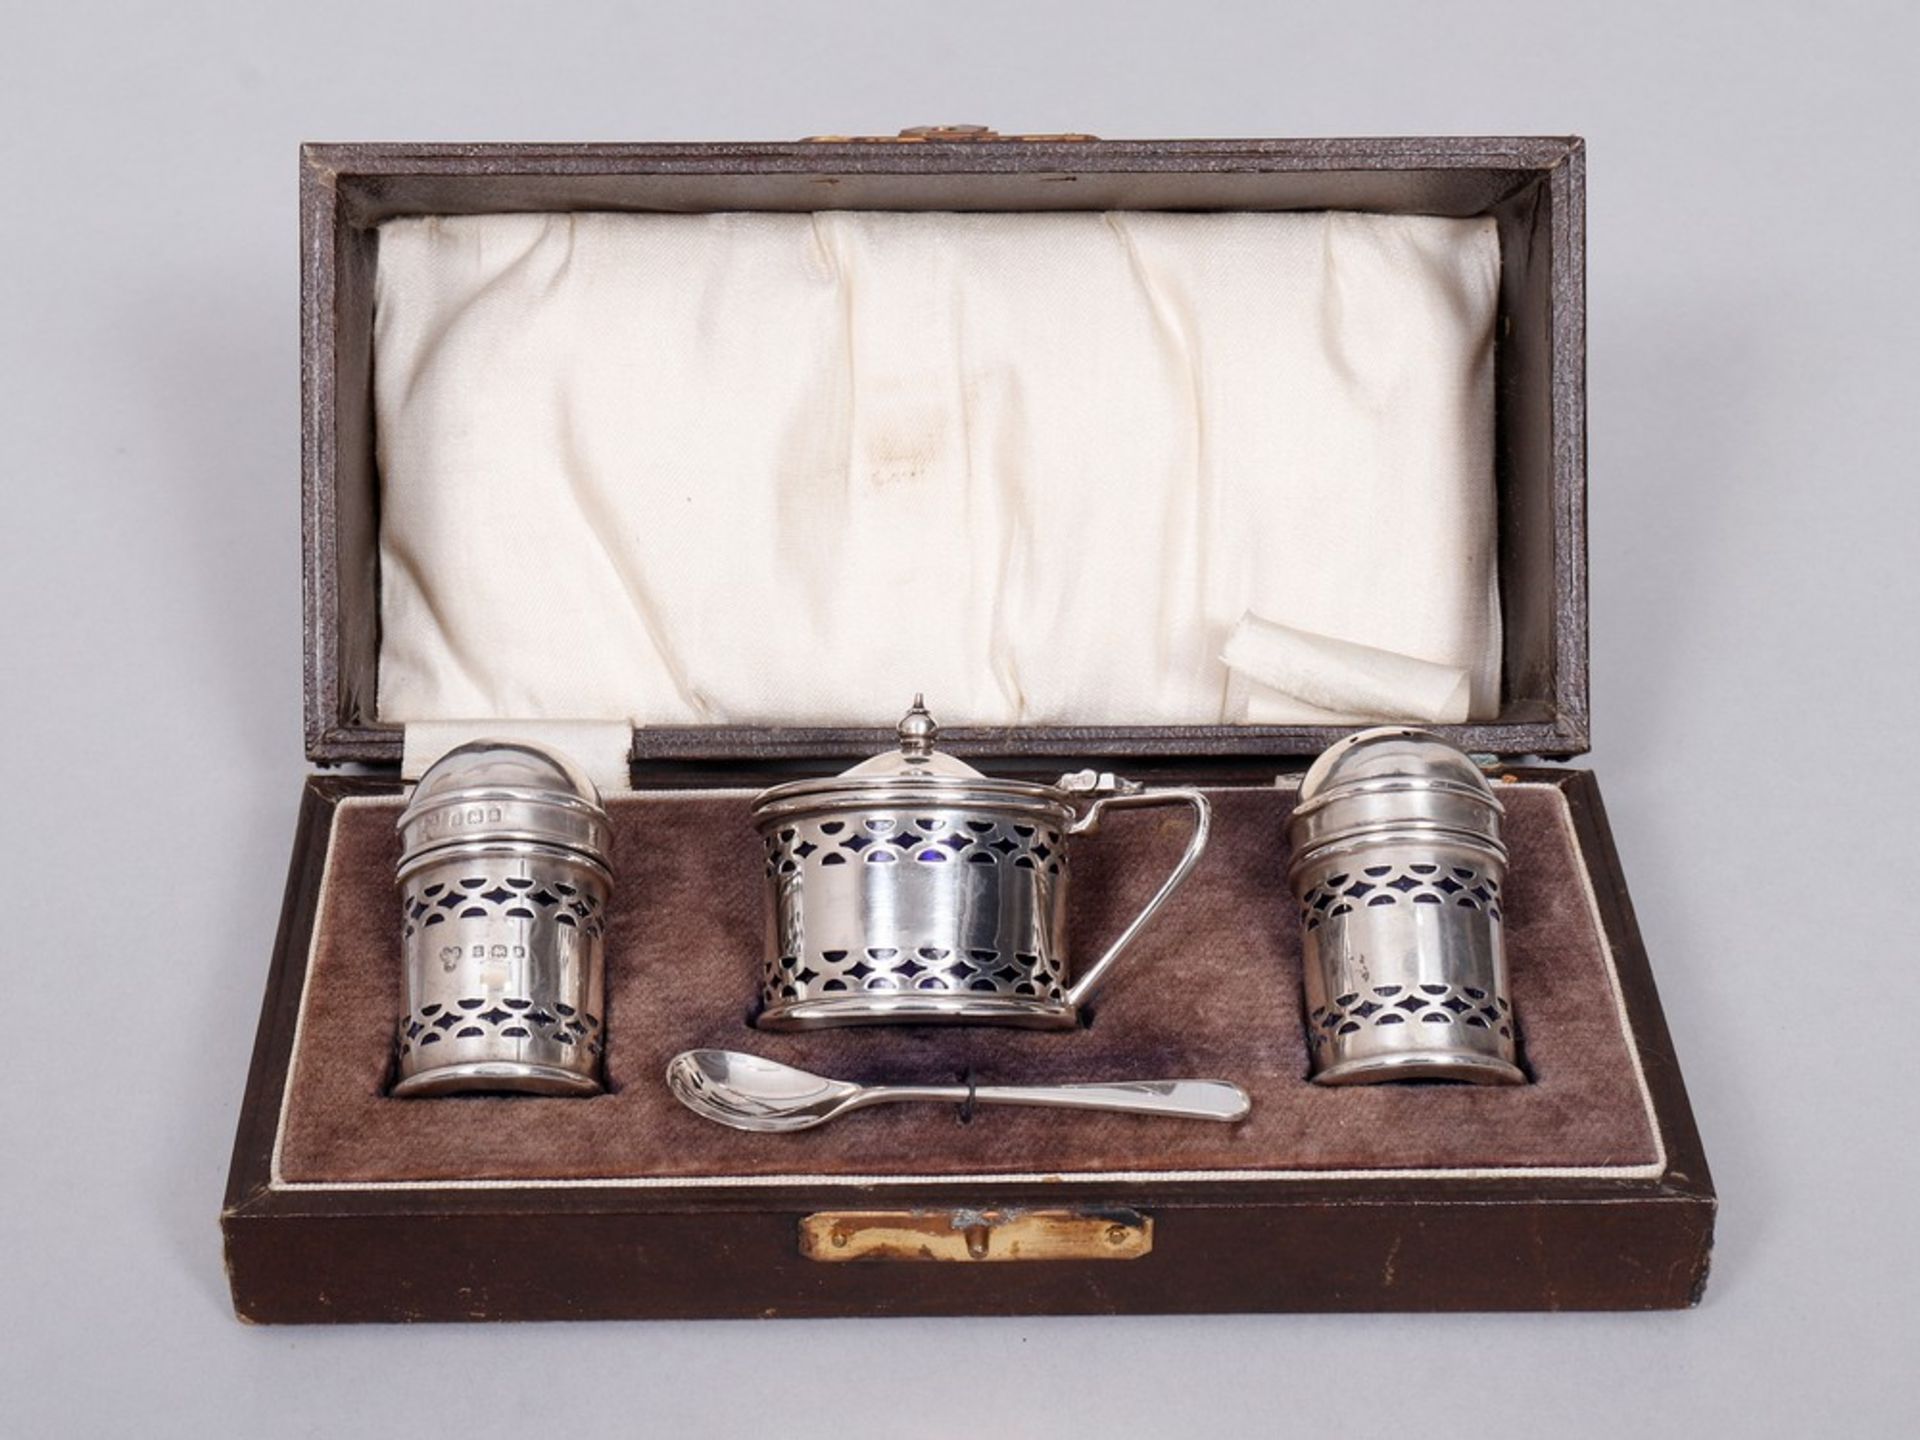 Gewürzset in Schatulle, 925er Silber, Charles Boyton & Sons, London, um 1926 